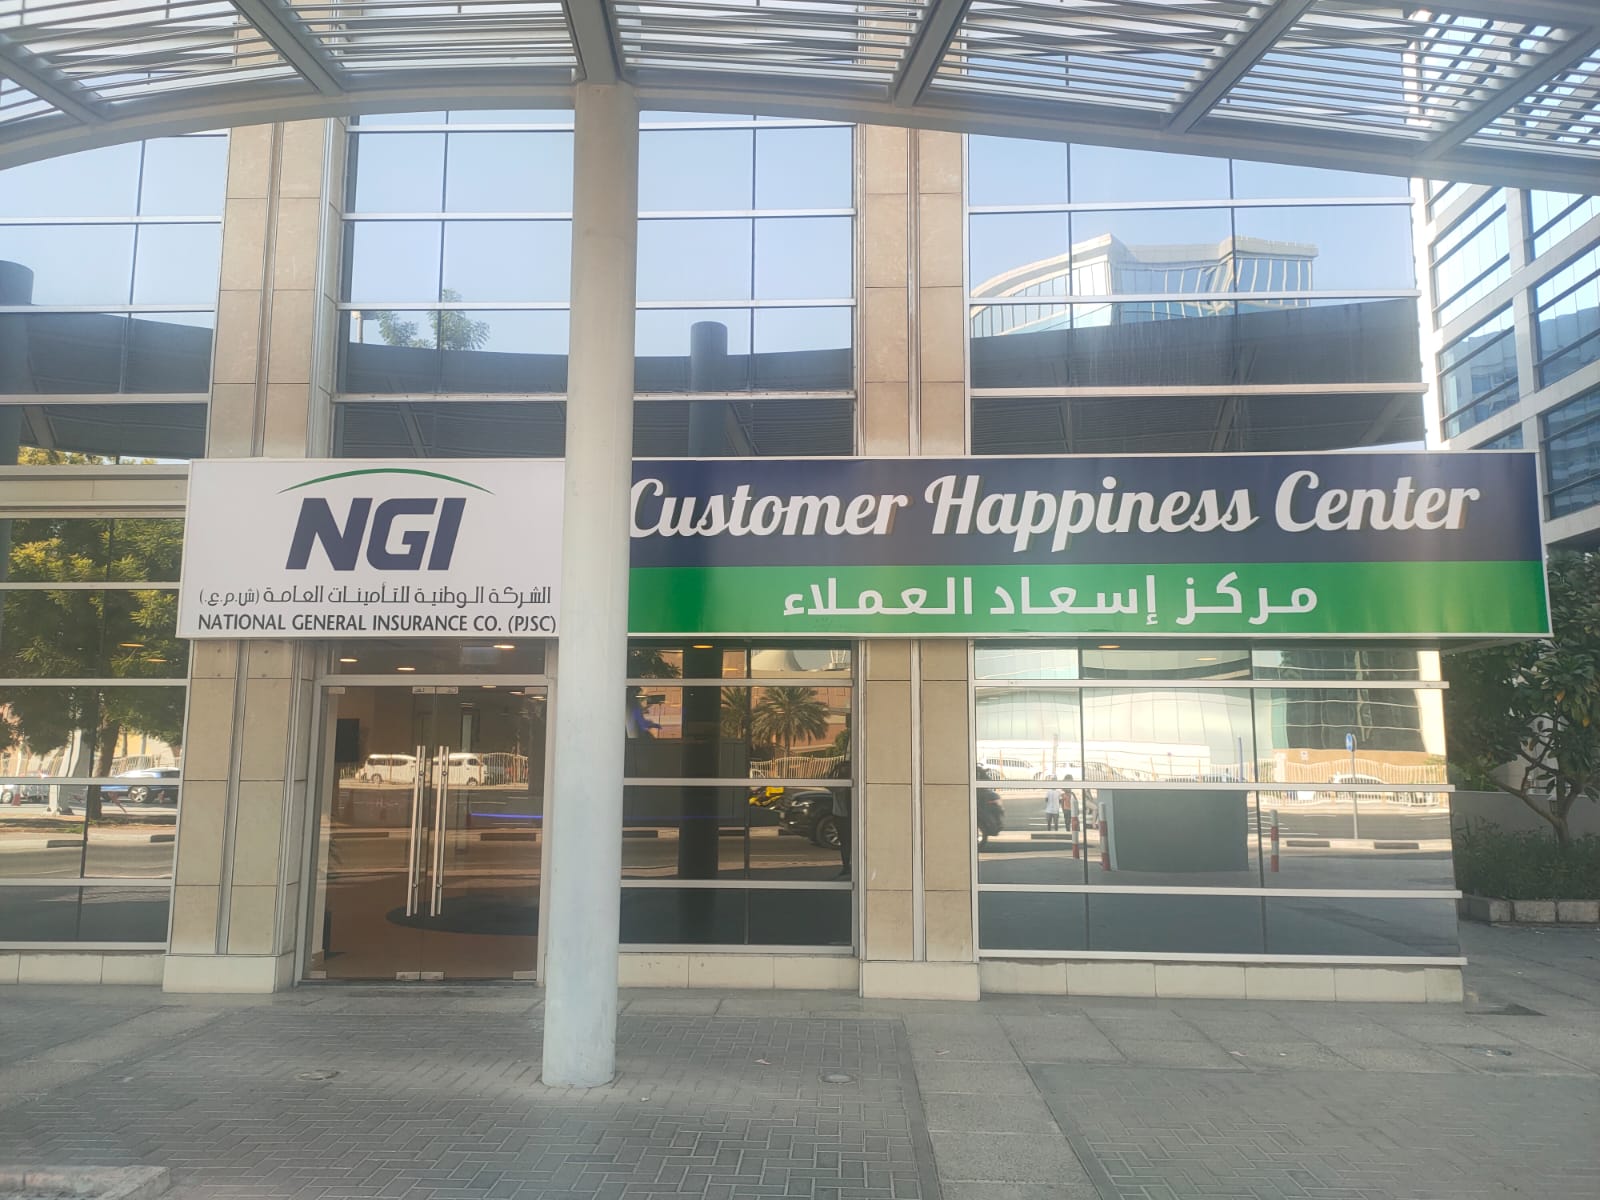 Inauguration of Customer Happiness Center